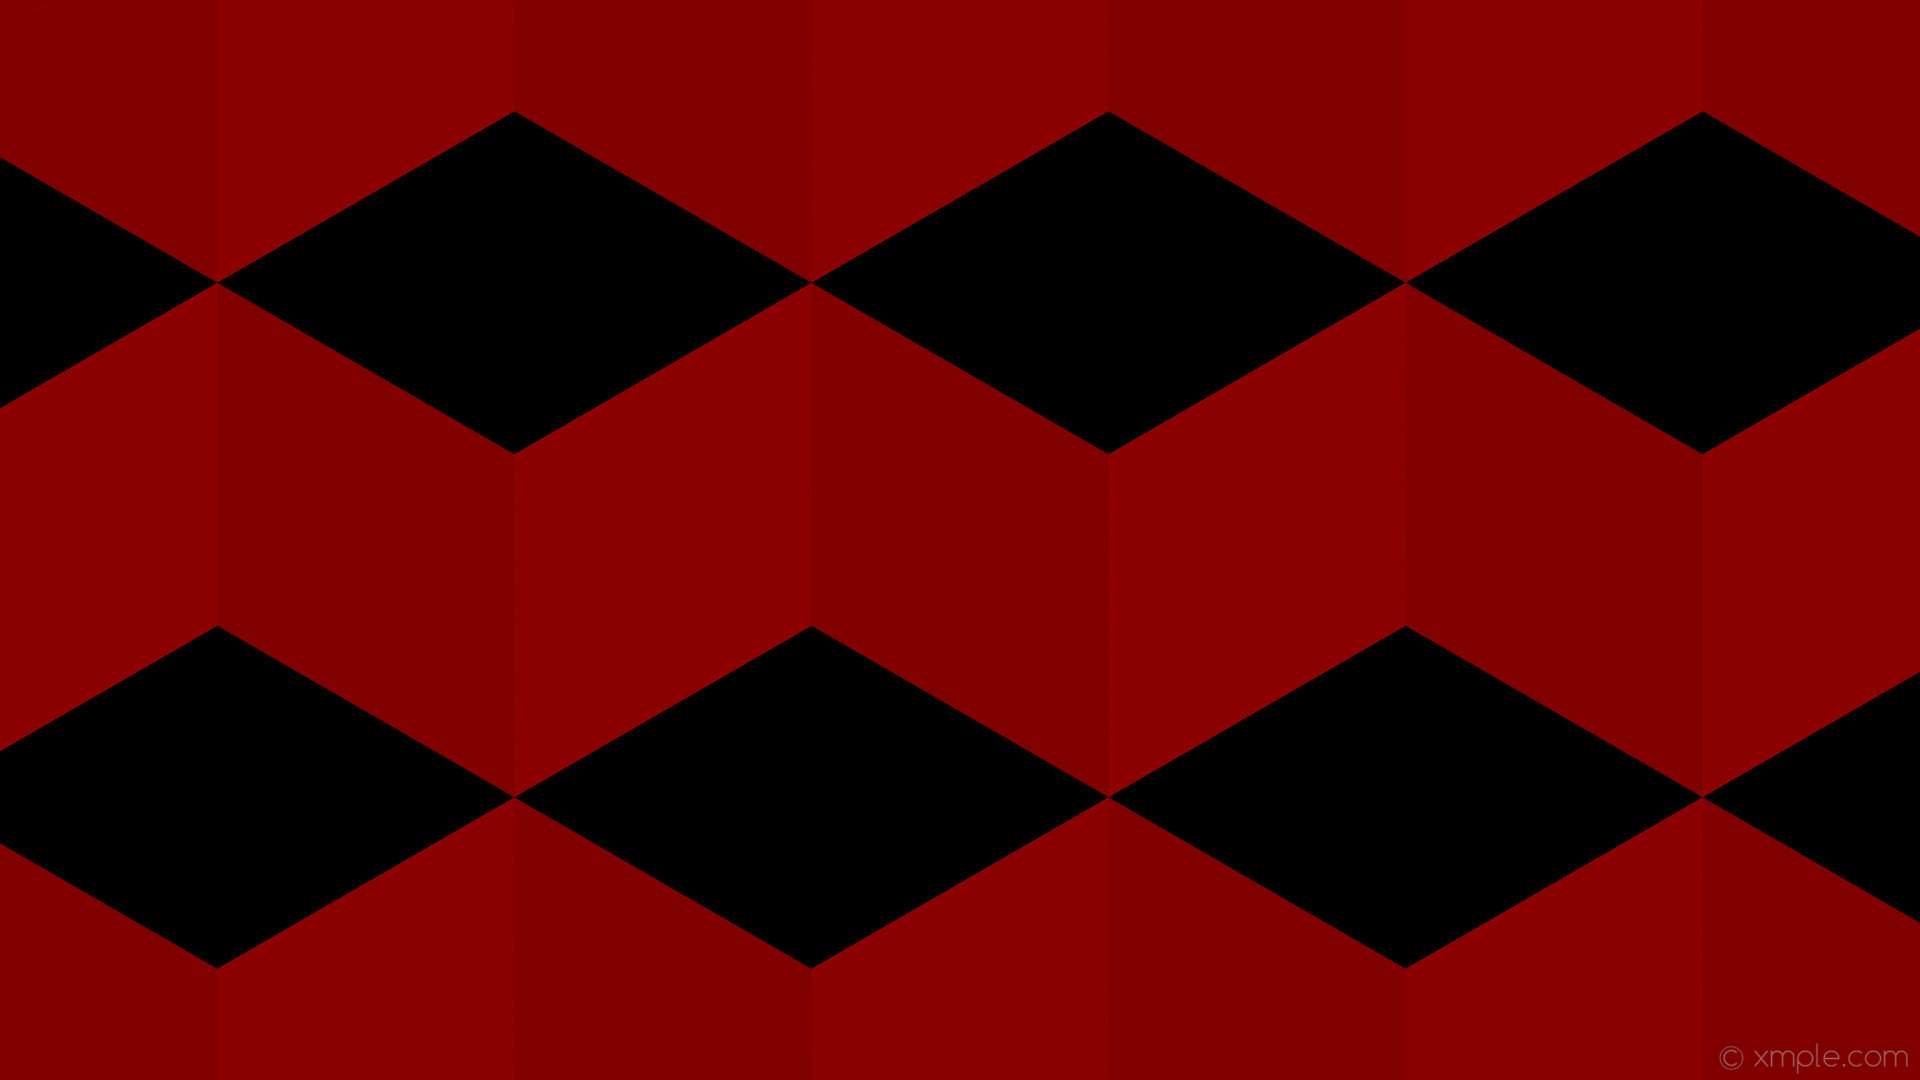 1920x1080 wallpaper black red 3d cubes brown maroon dark red #800000 #8b0000 #000000  300